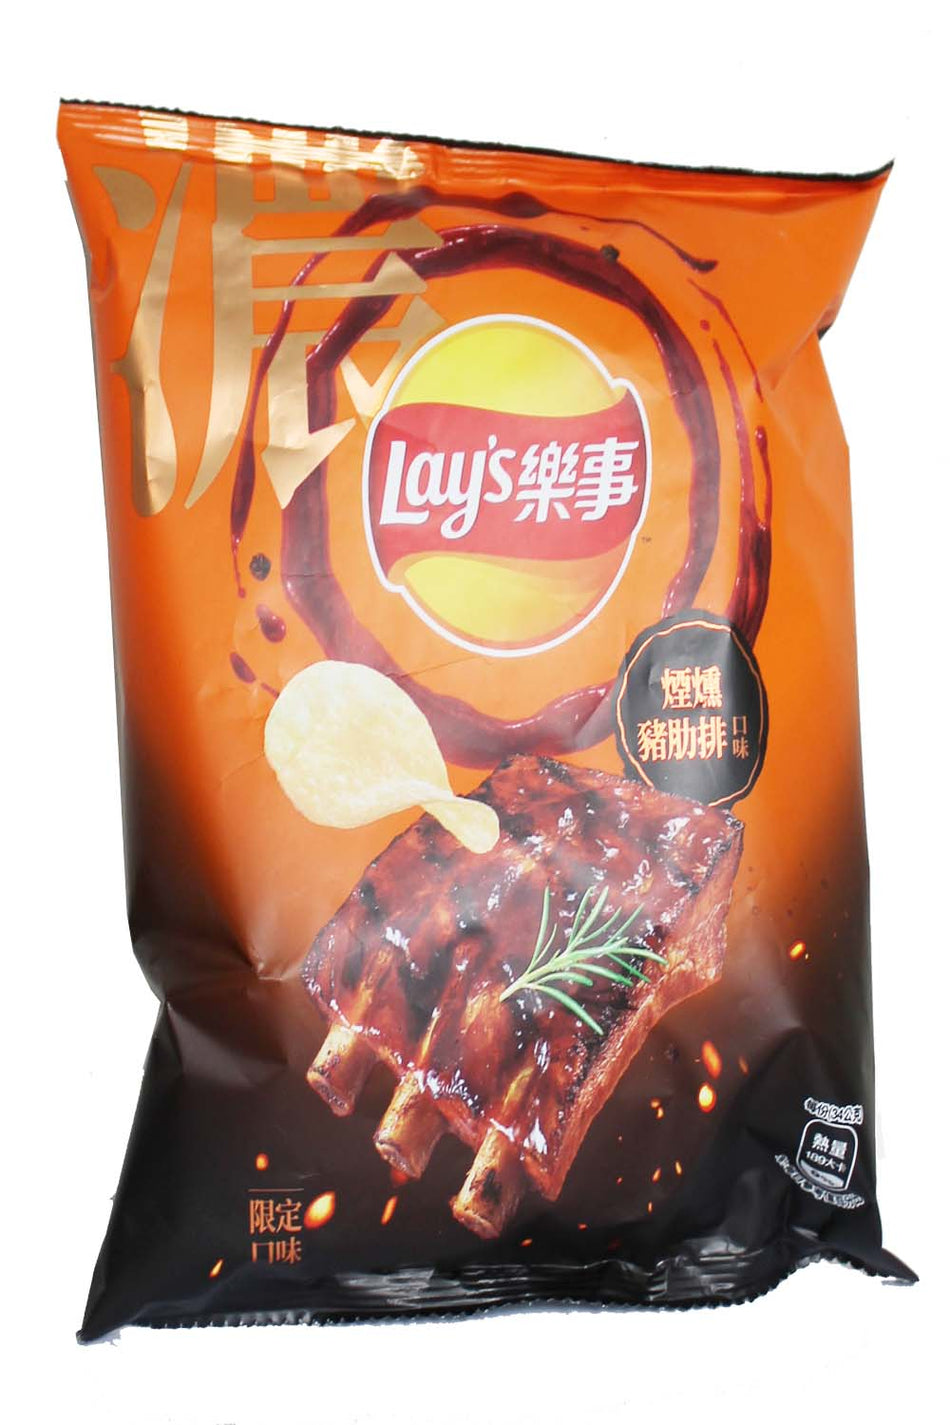 Lay's Smoke pork Ribs  flavor chip